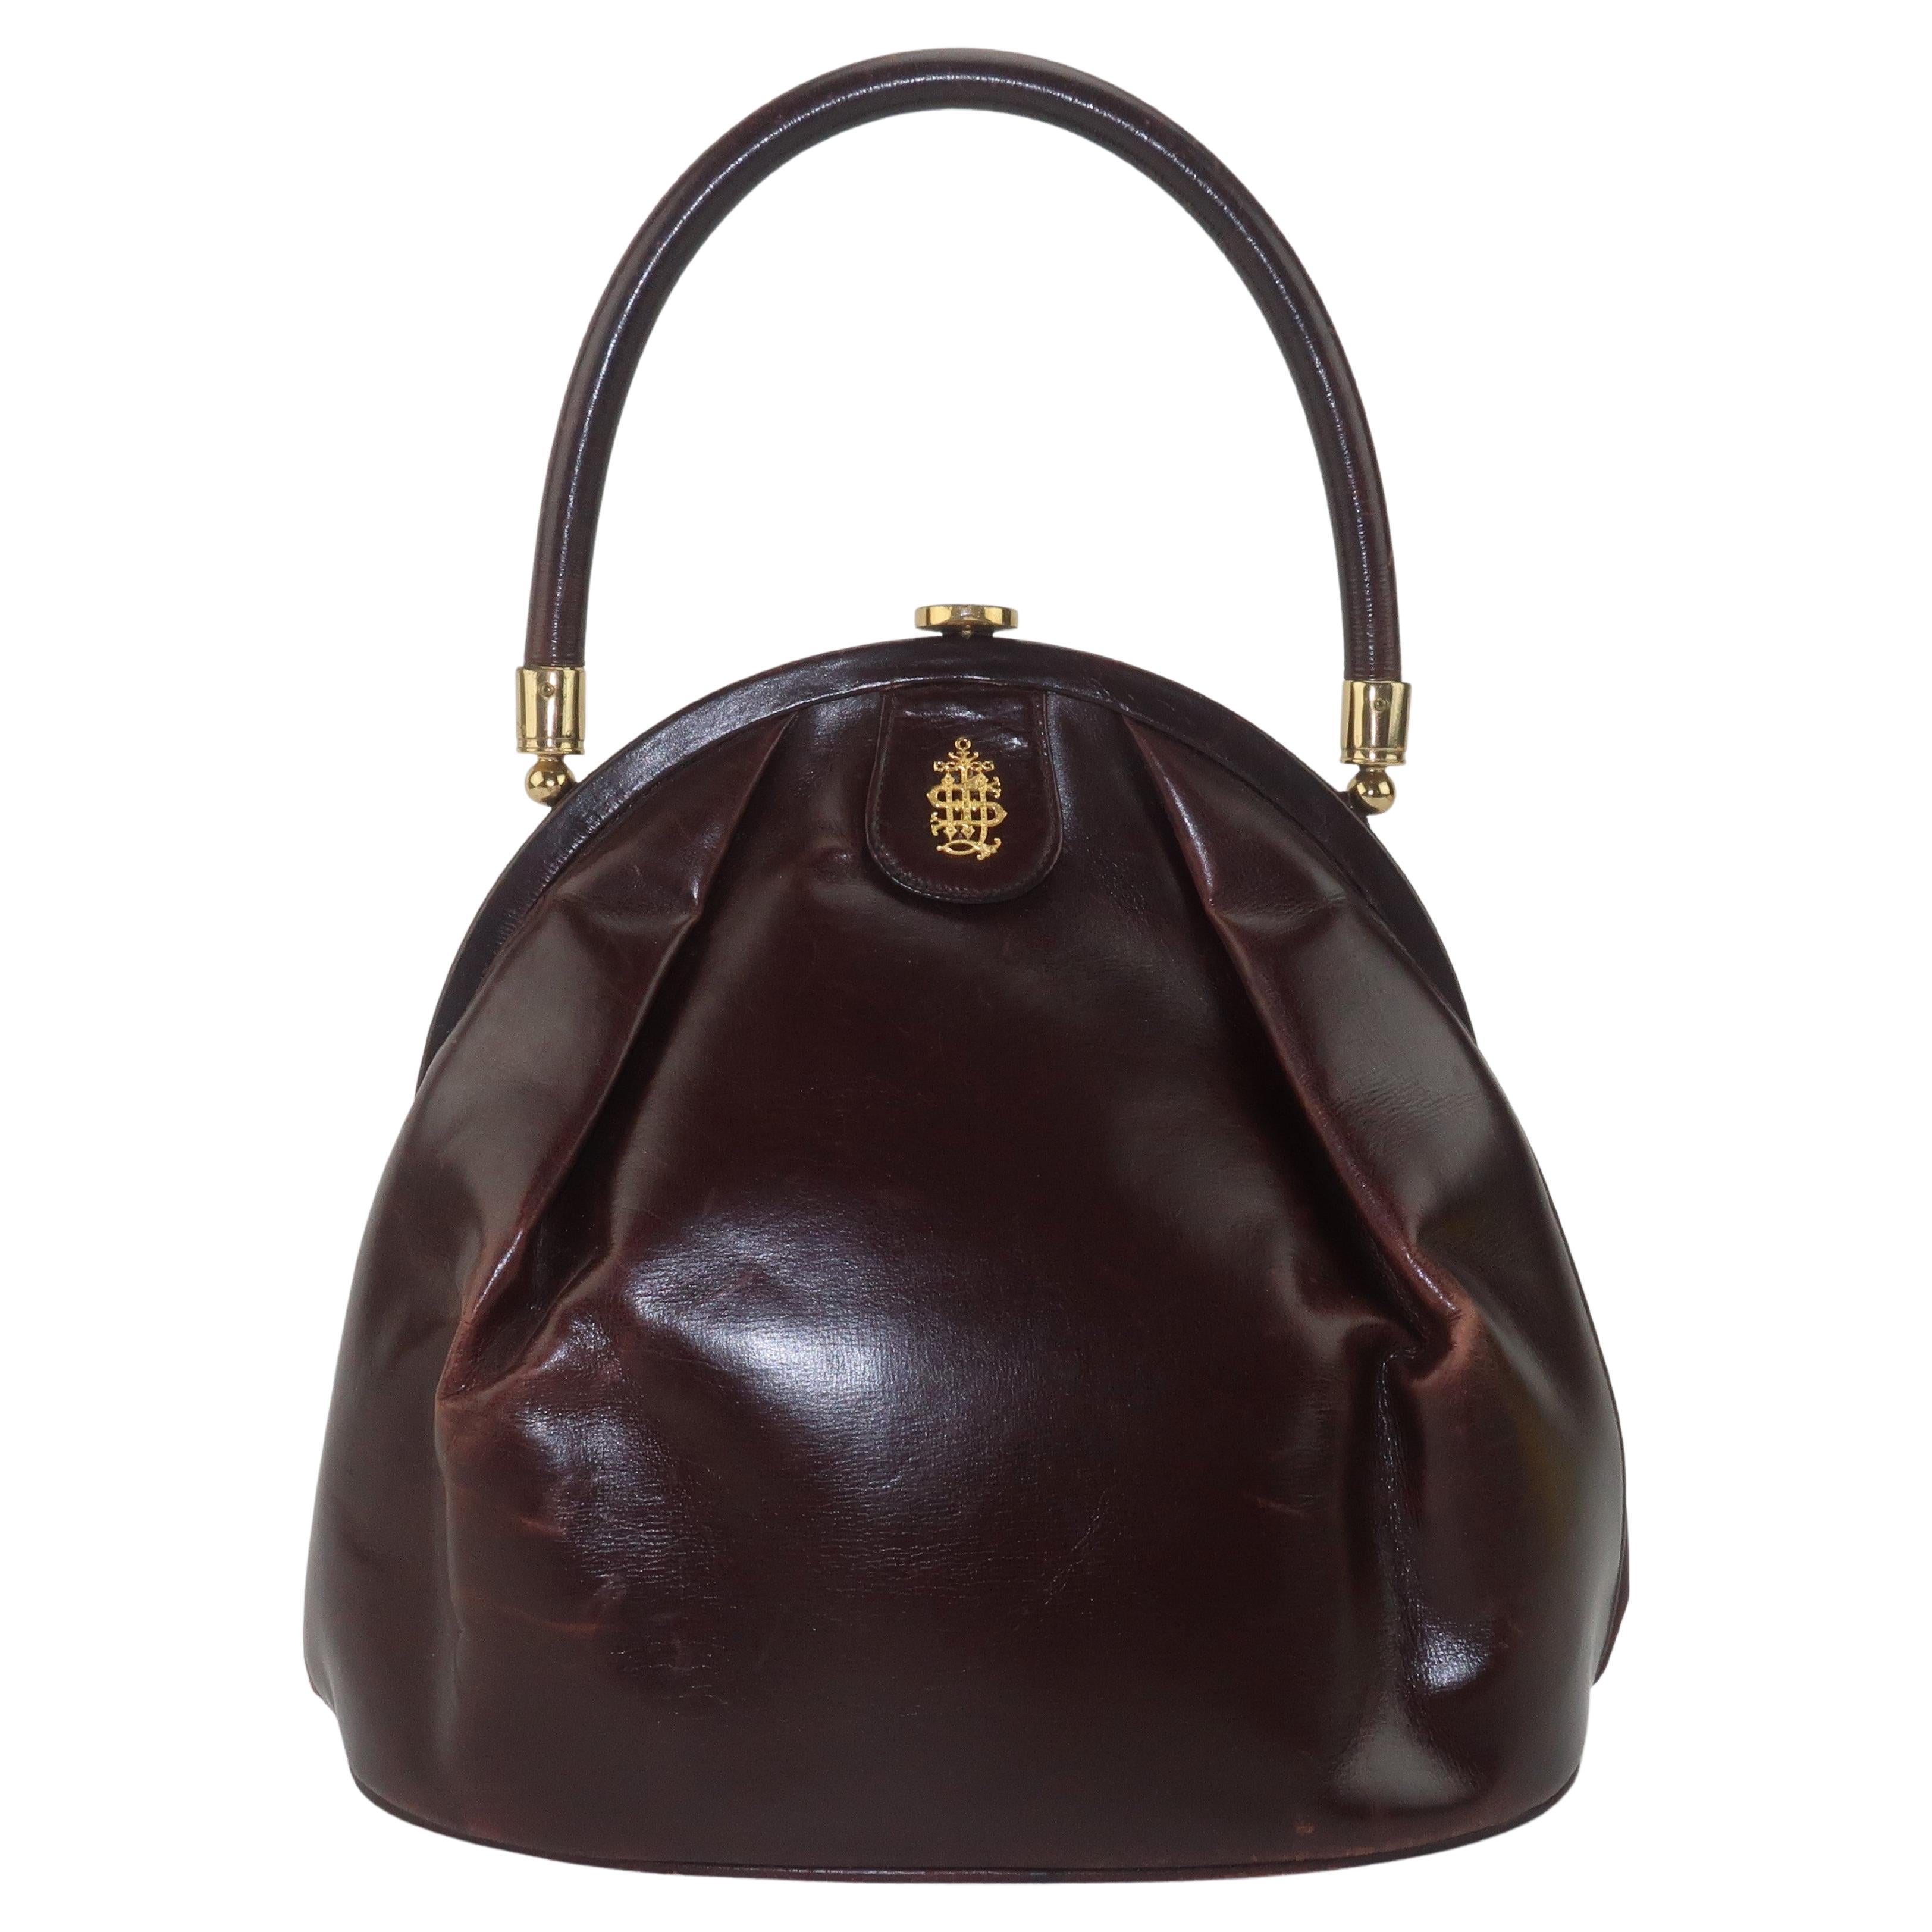 Bienen Davis Brown Leather Pouch Style Handbag, 1930's